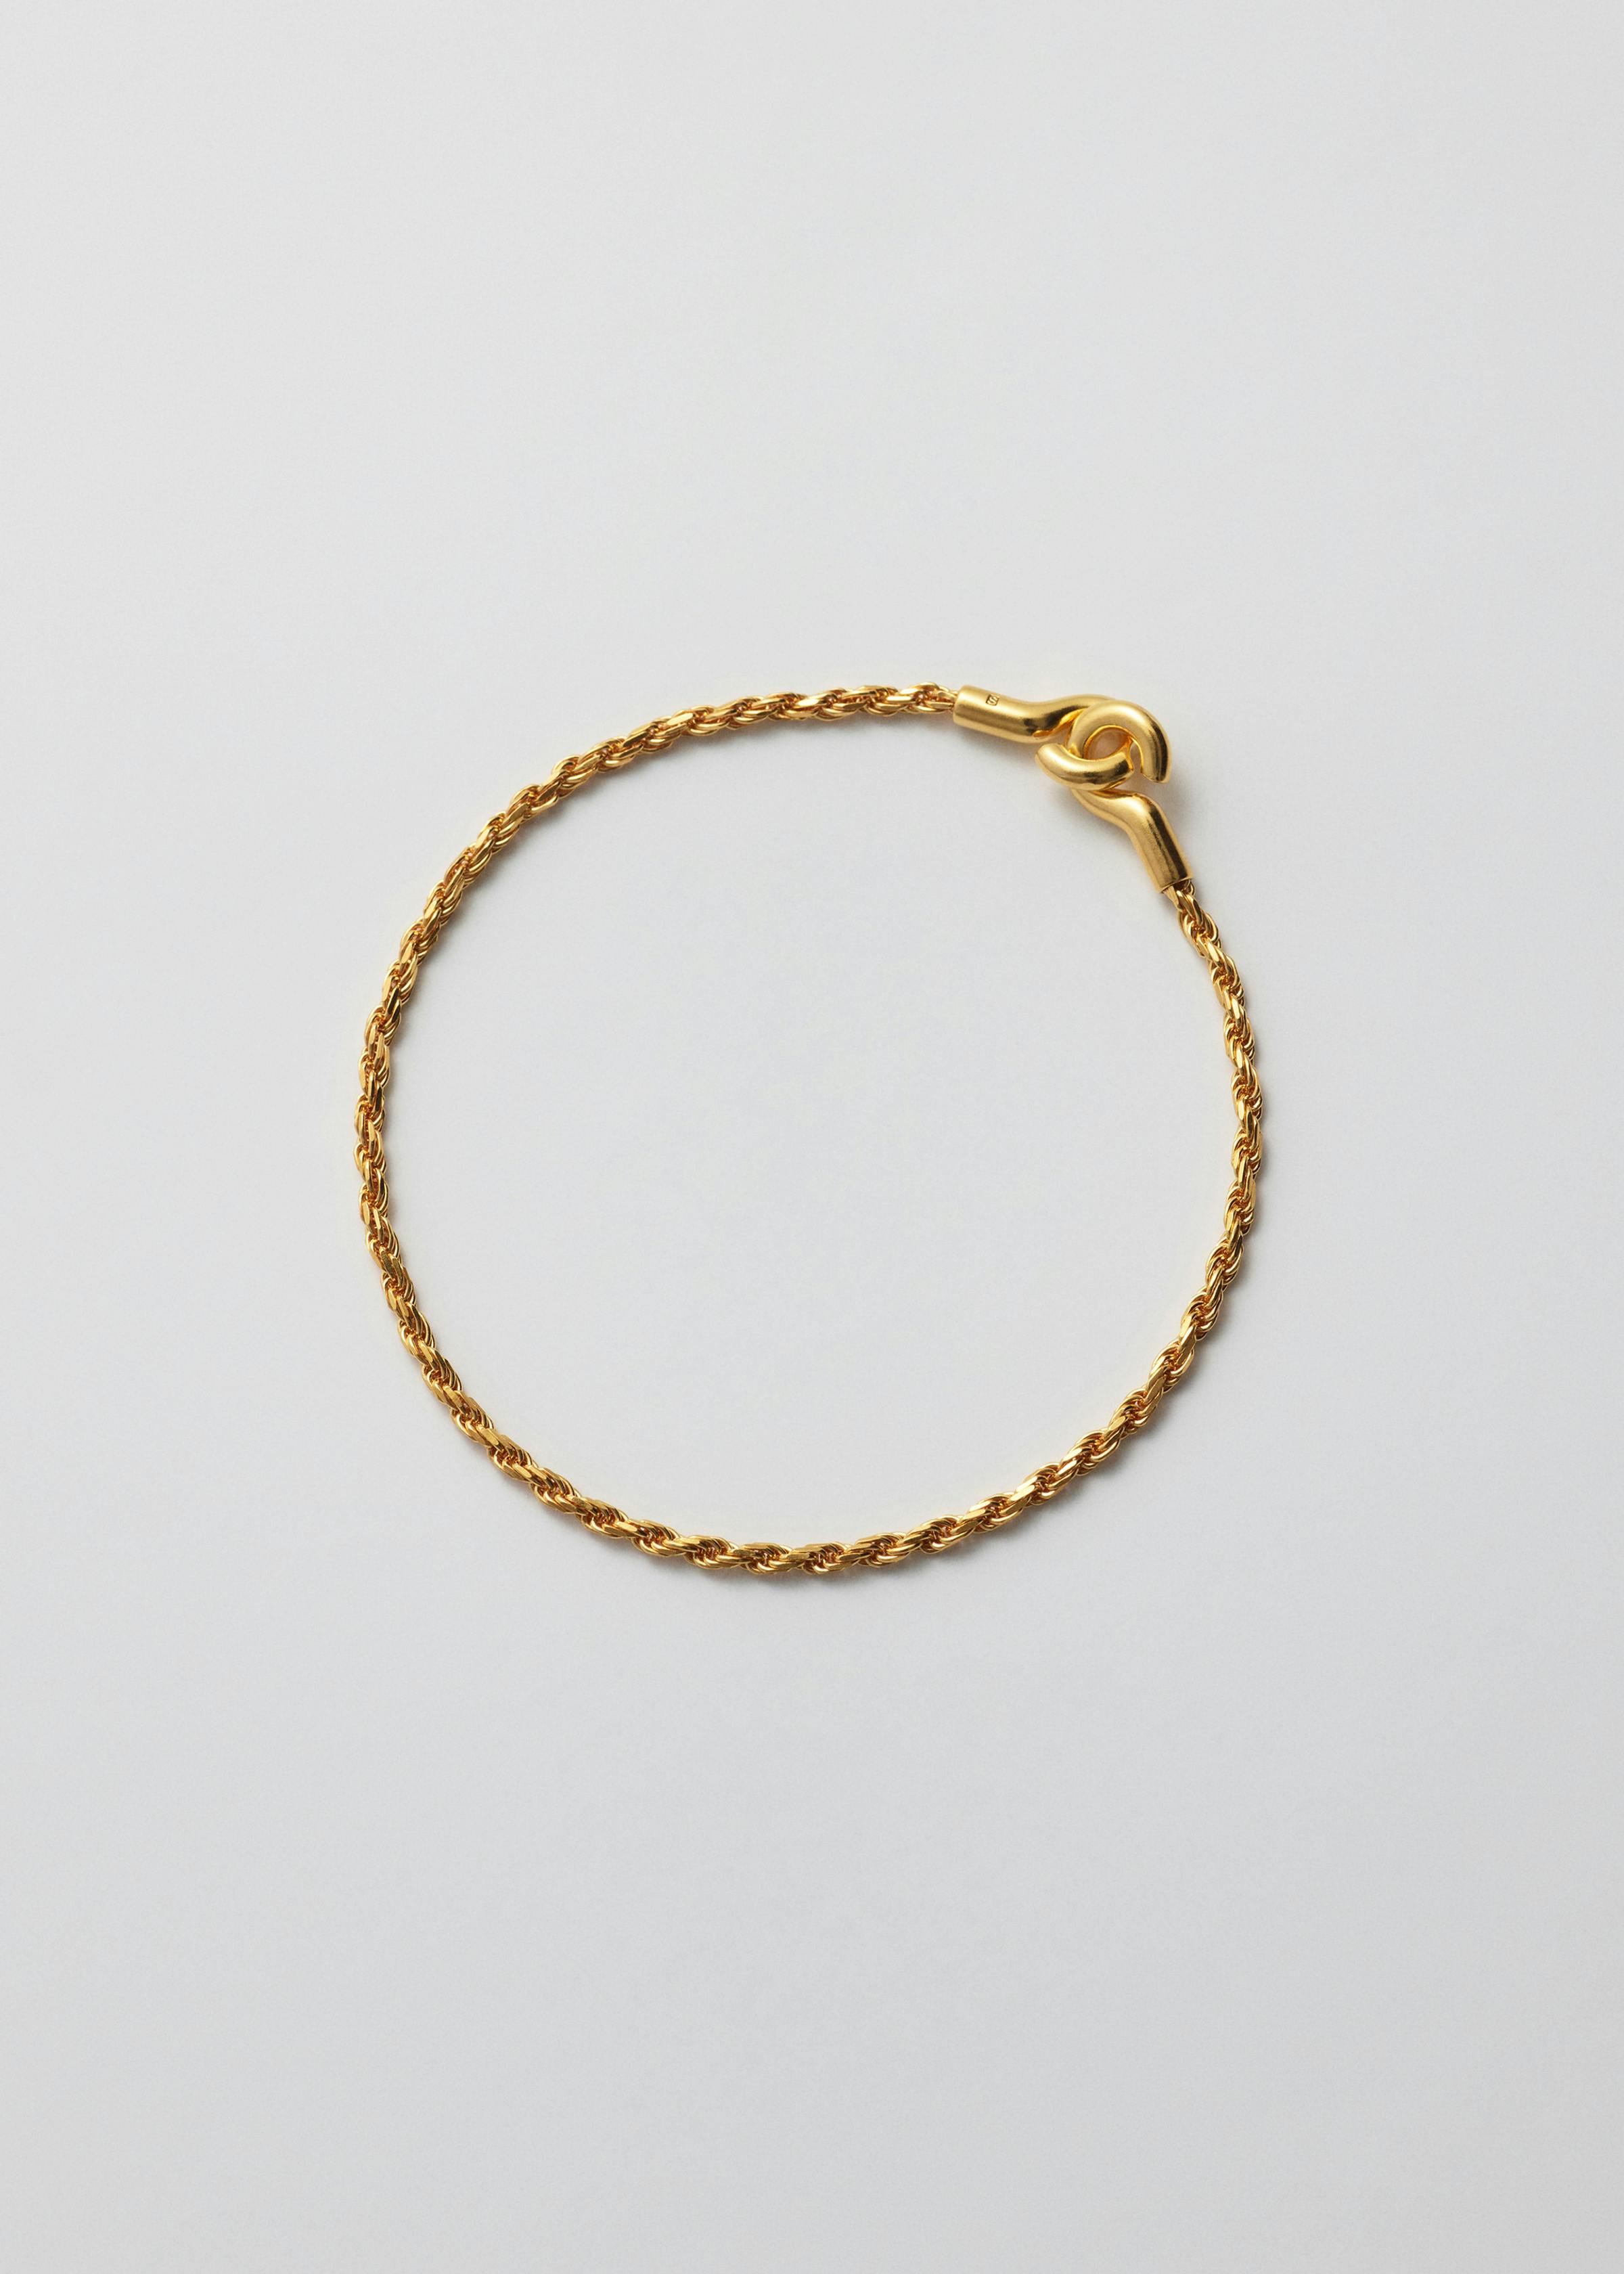 Rope bracelet thin single